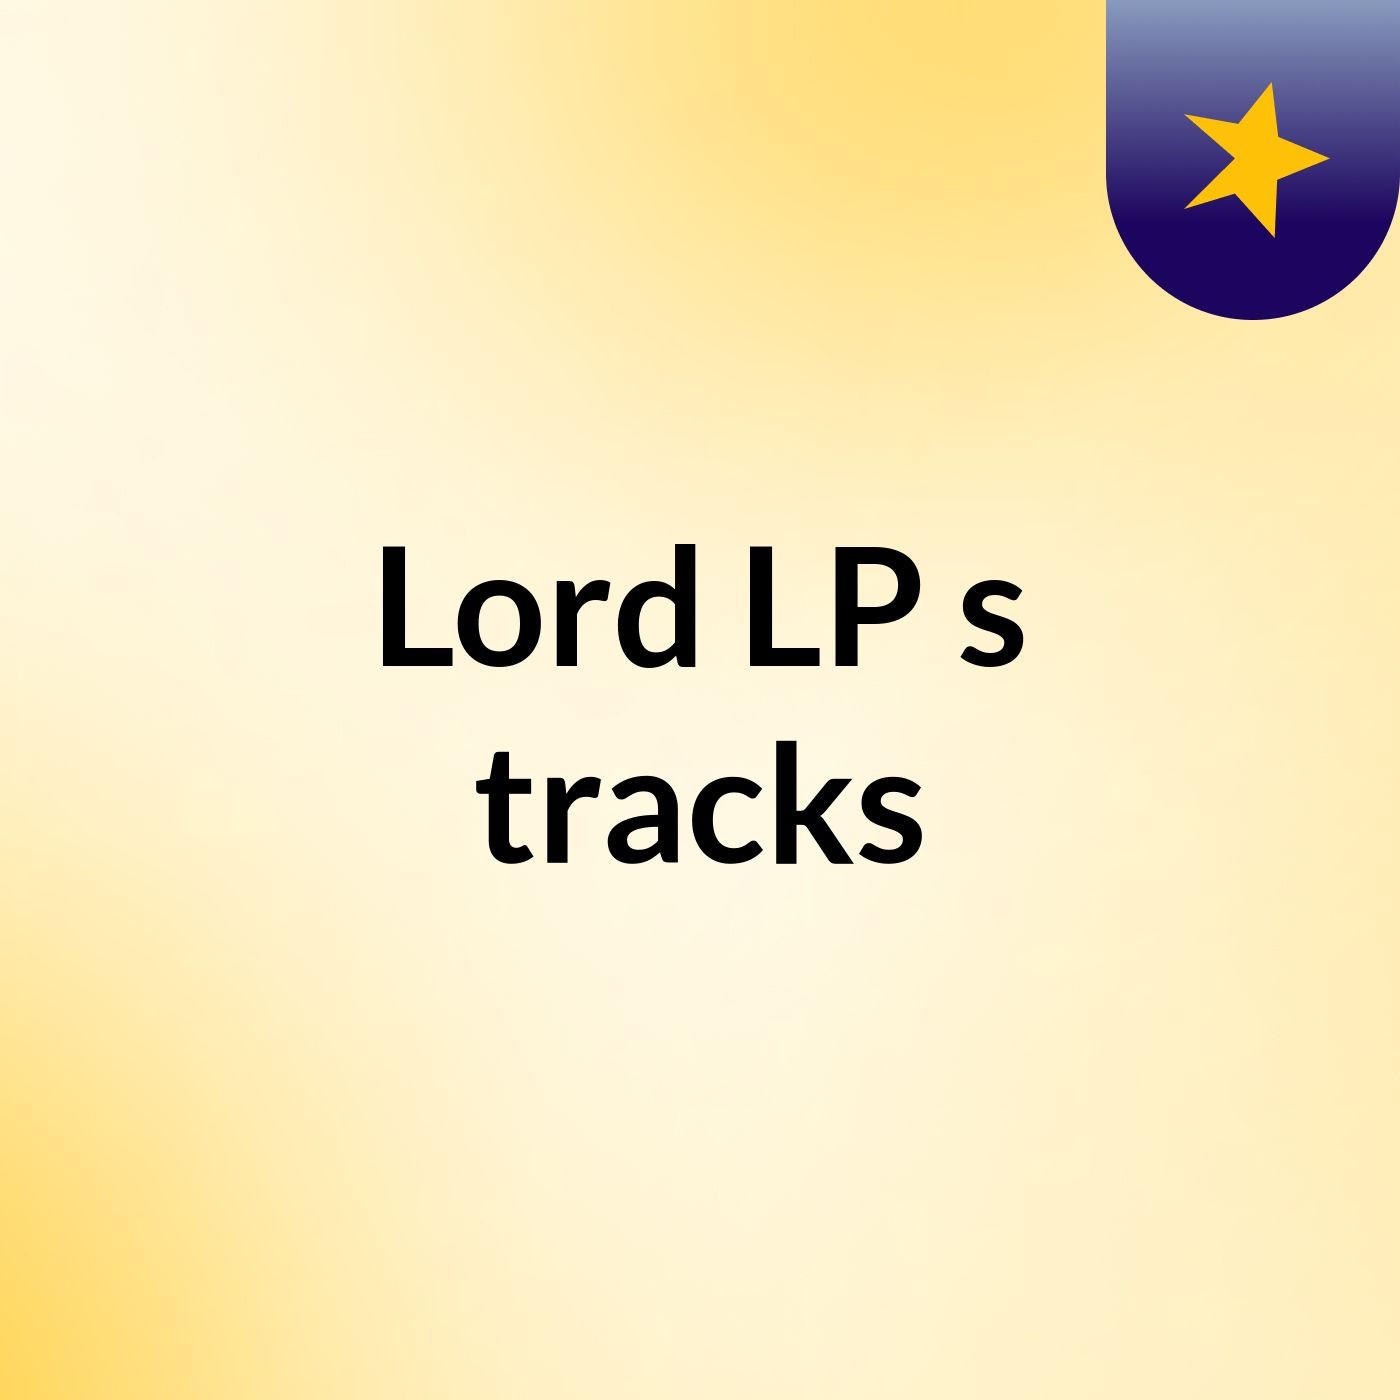 Lord LP's tracks